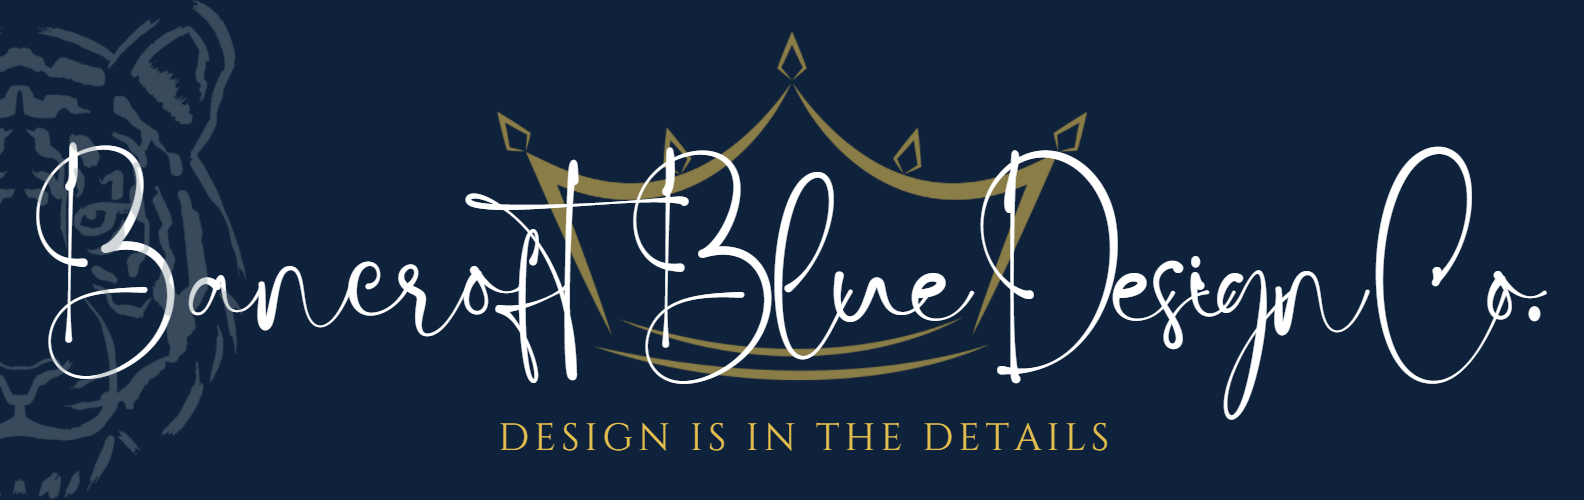 Bancroft Blue Design Co. logo